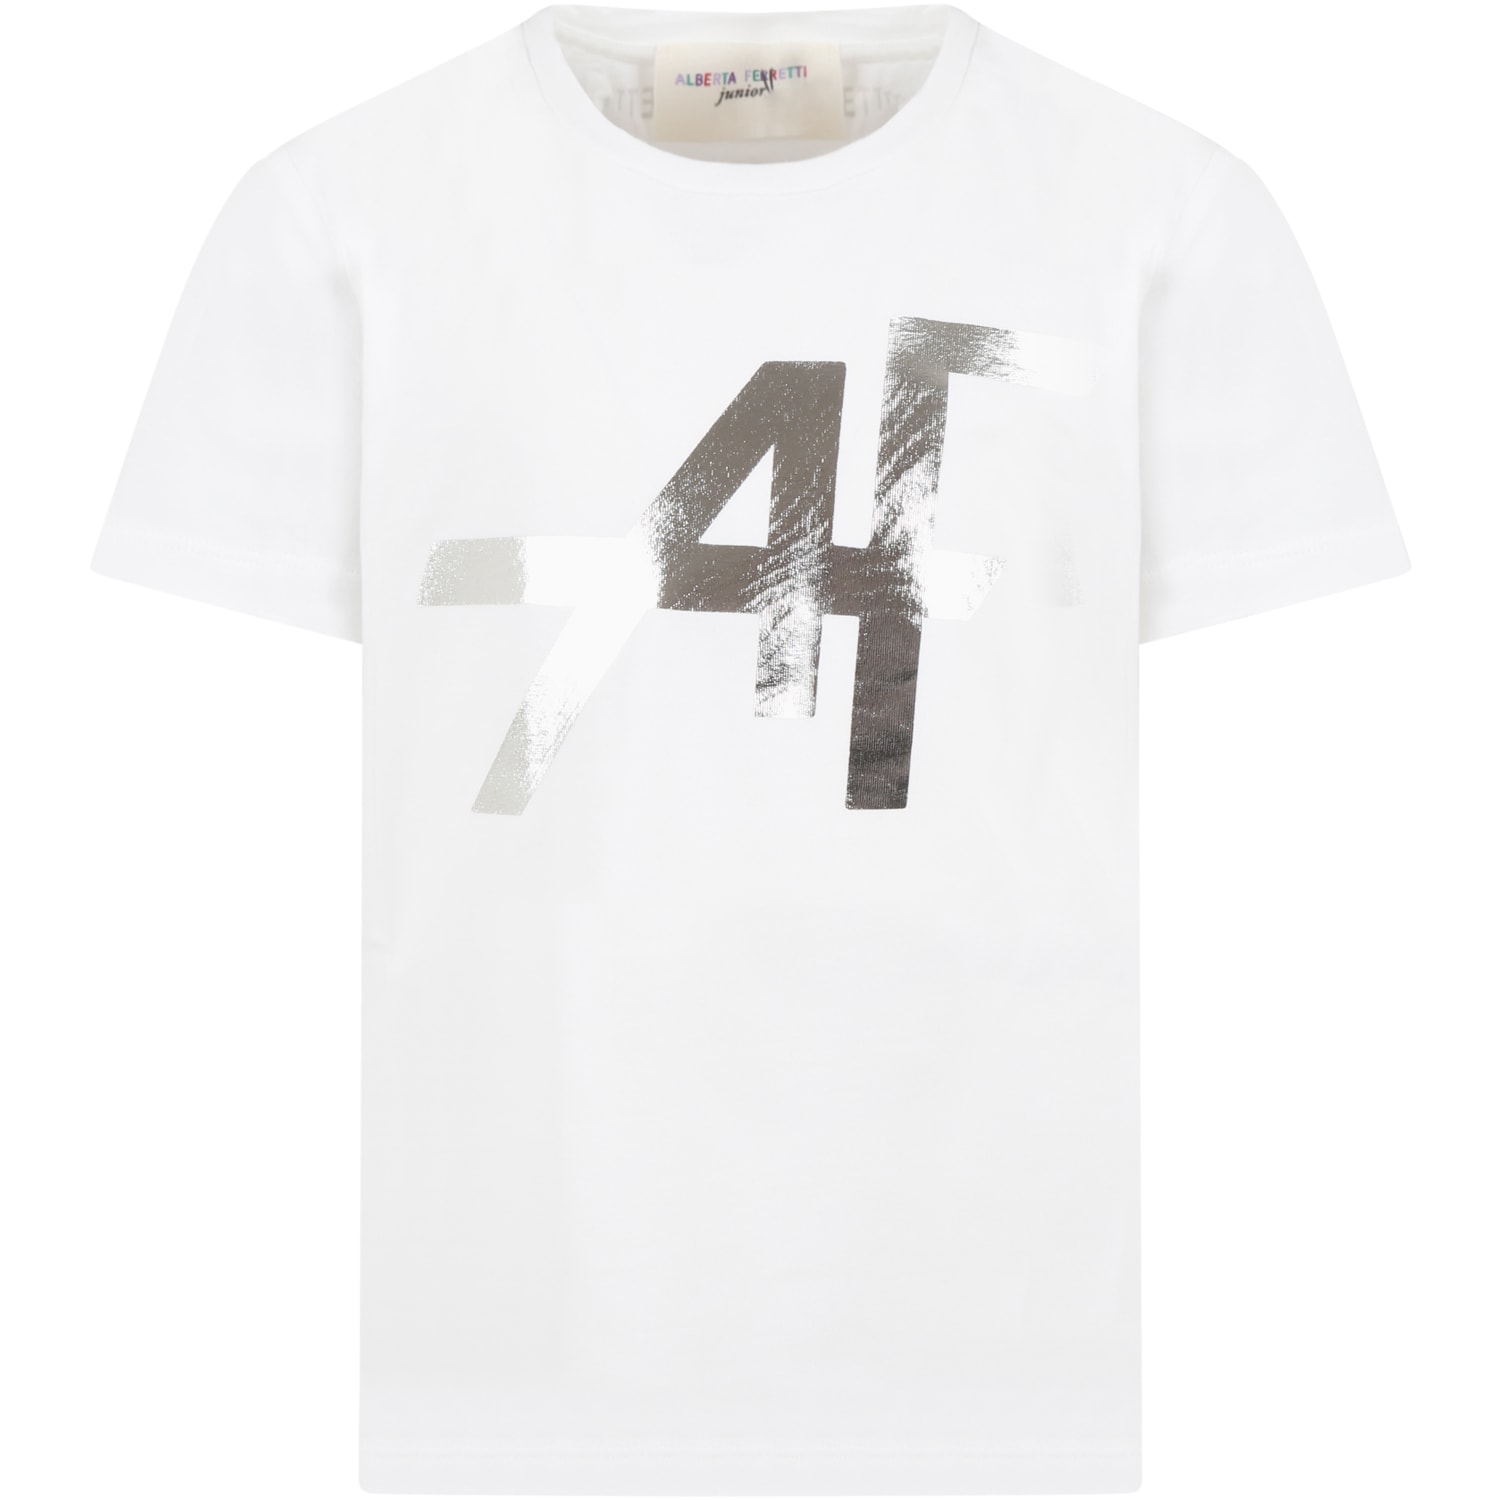 Alberta Ferretti White T-shirt For Girl With Silver Logo